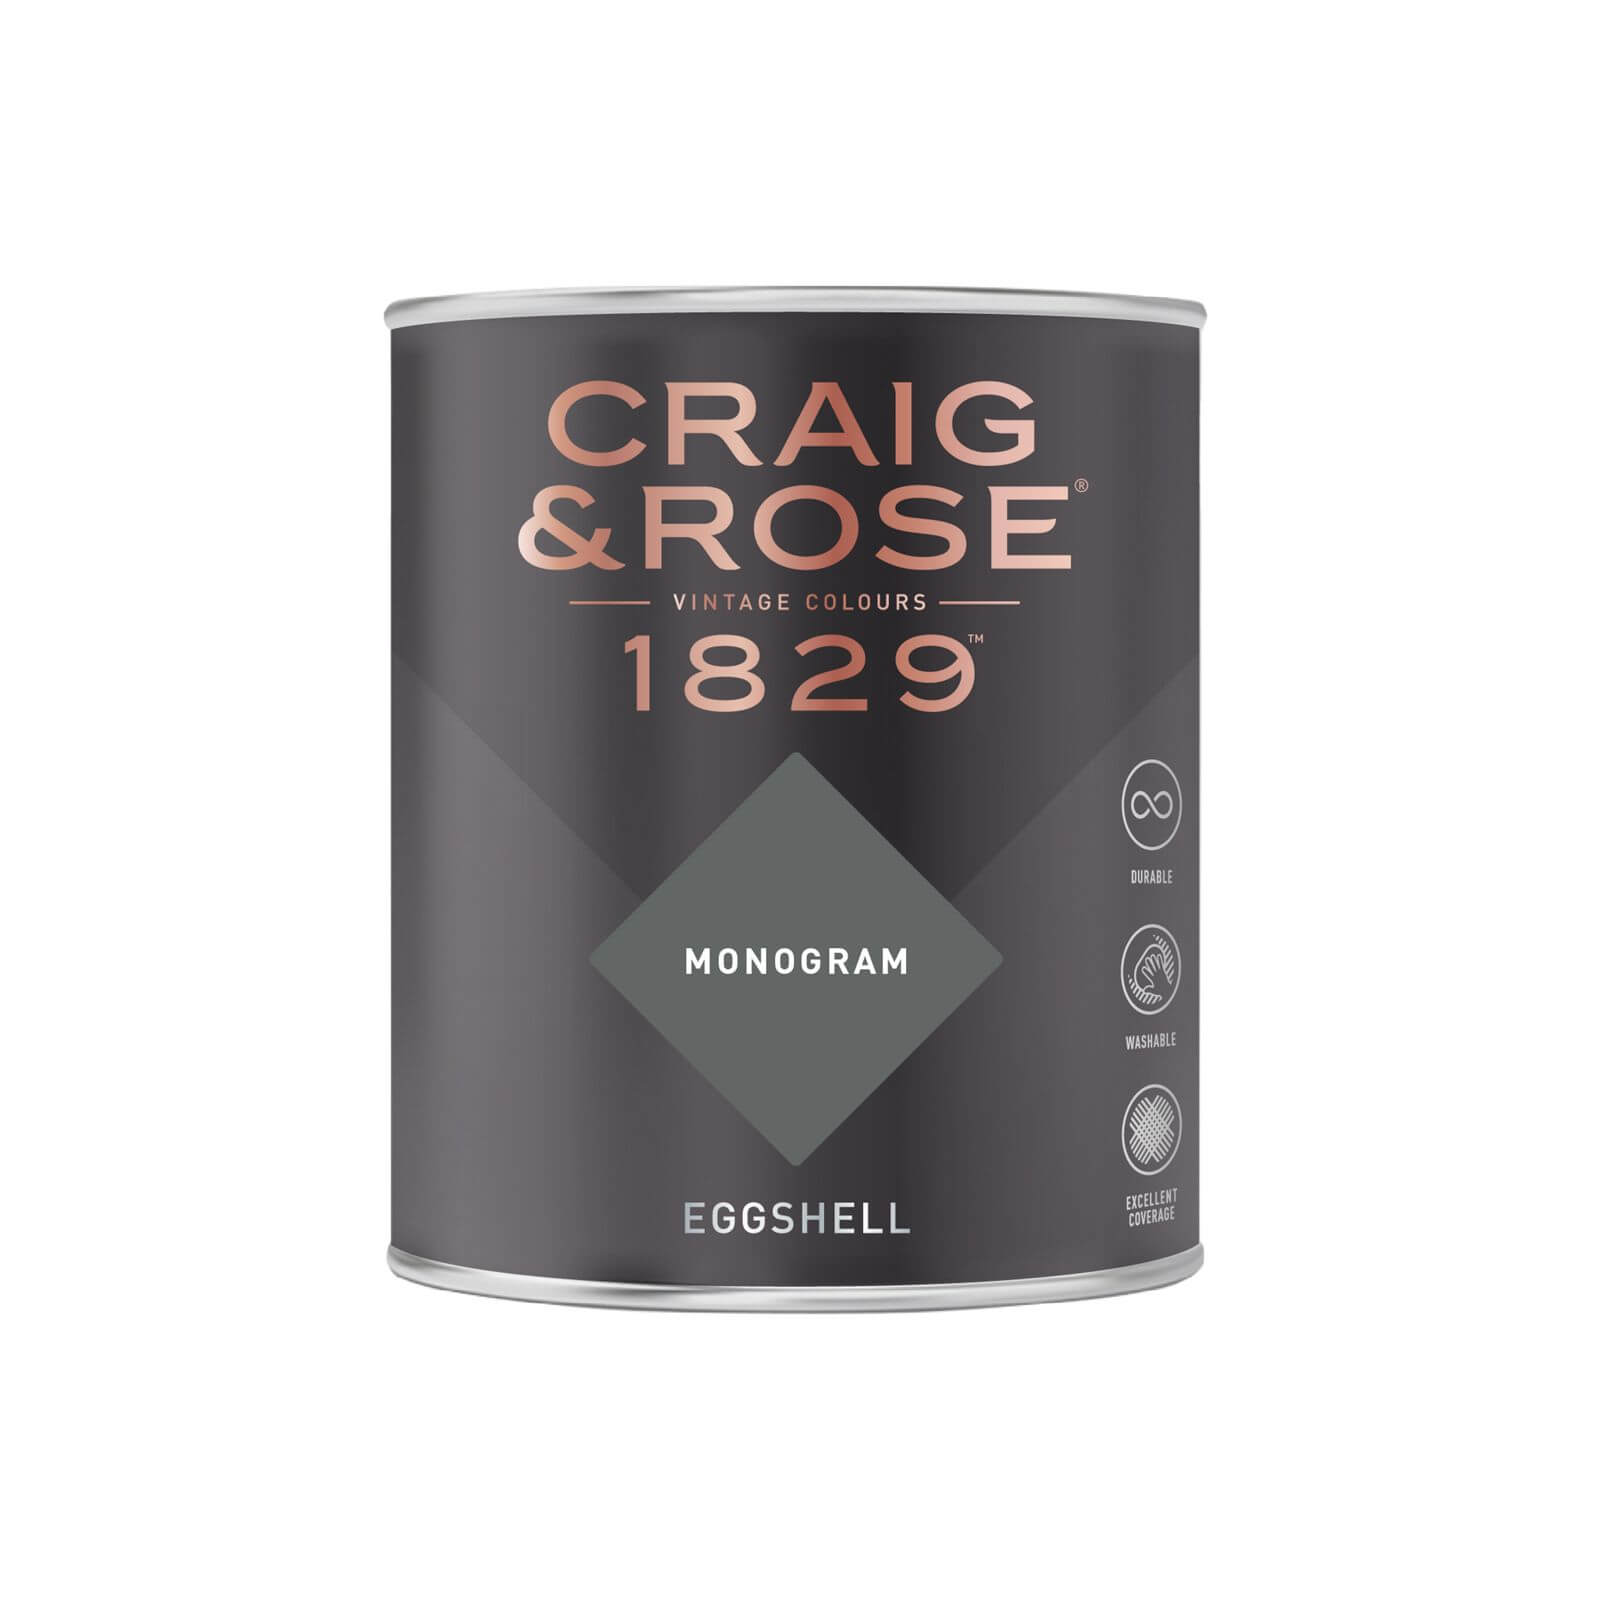 Craig & Rose 1829 Eggshell Paint Monogram - 750ml